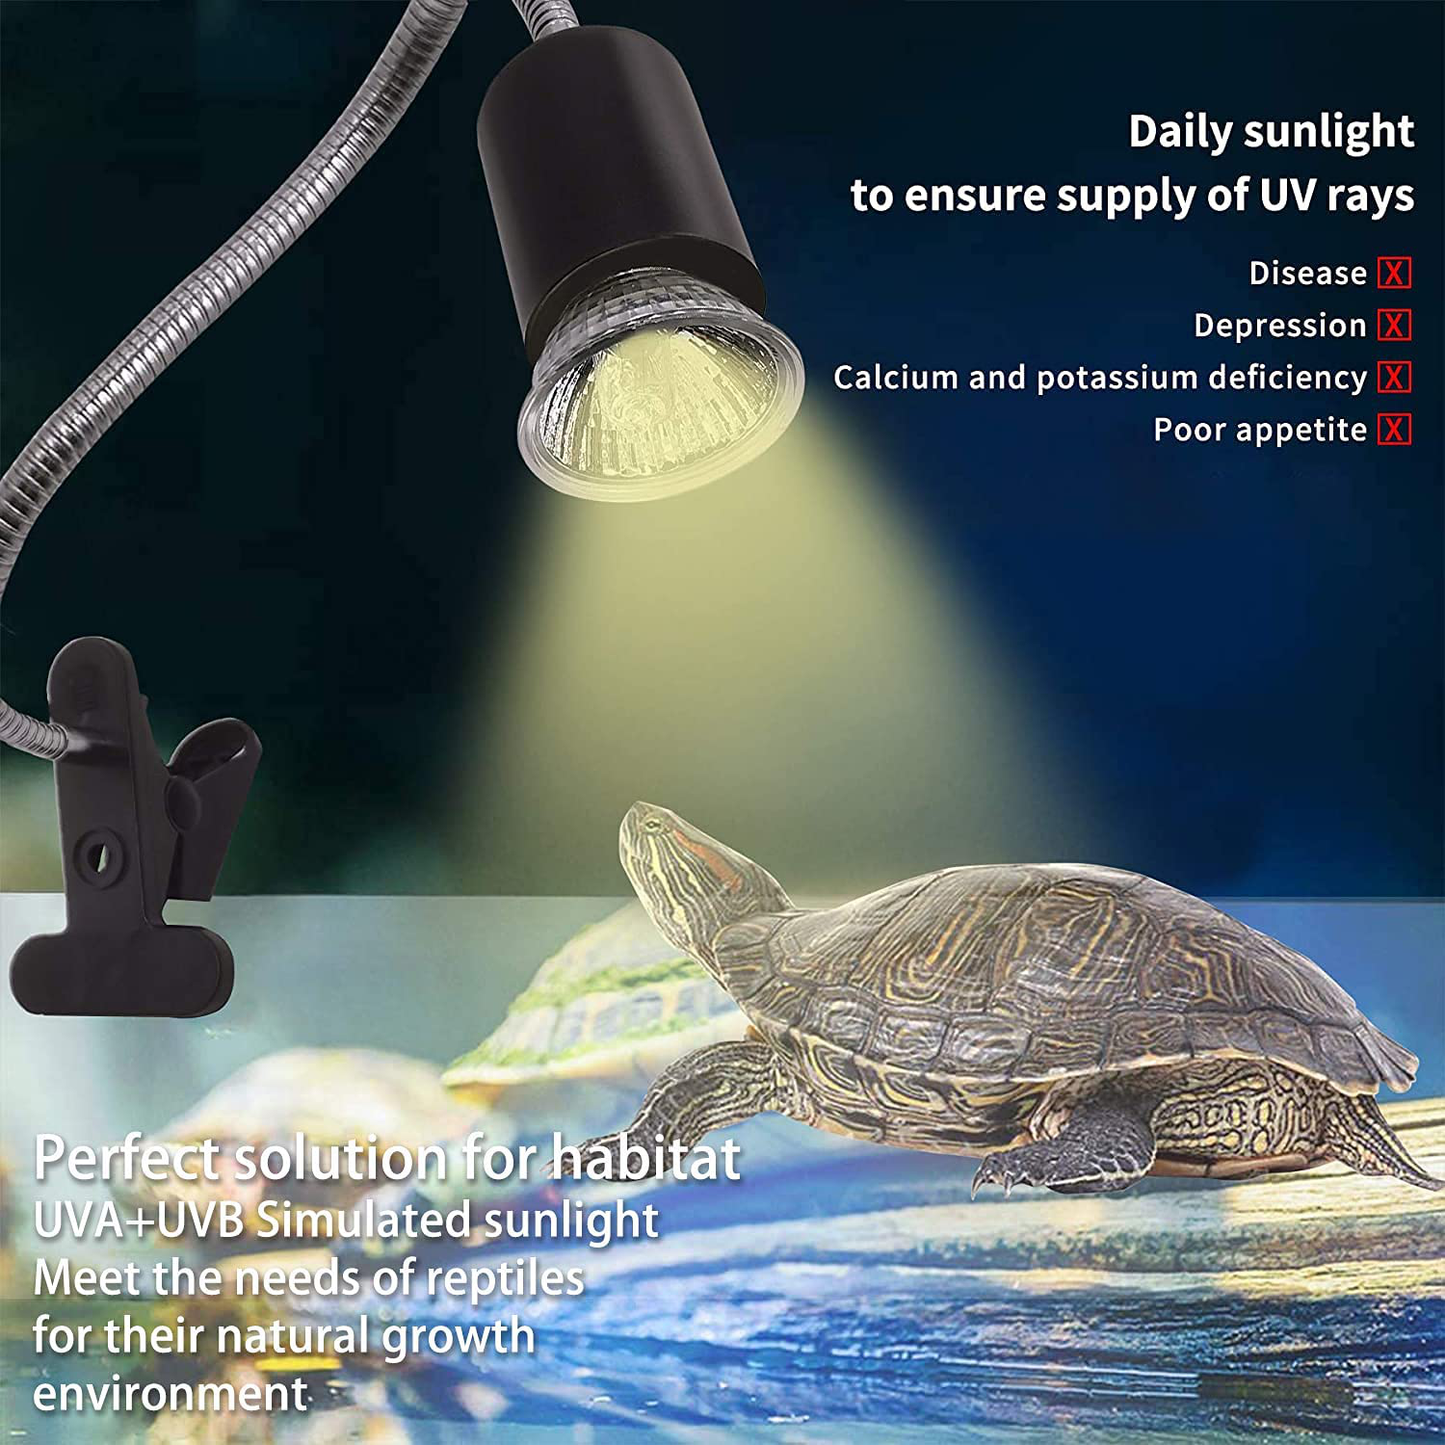 Aquarium Tank Heat Light,Reptile Heat Lamp,E26/E27 Turtle Basking Spot Lamp with Dimmable Switch,86.6In Habitat Basking Heat Lamp,Heating Lighting for Tortoise/Lizard/Amphibian/Snake/Aquarium(No Bulb)